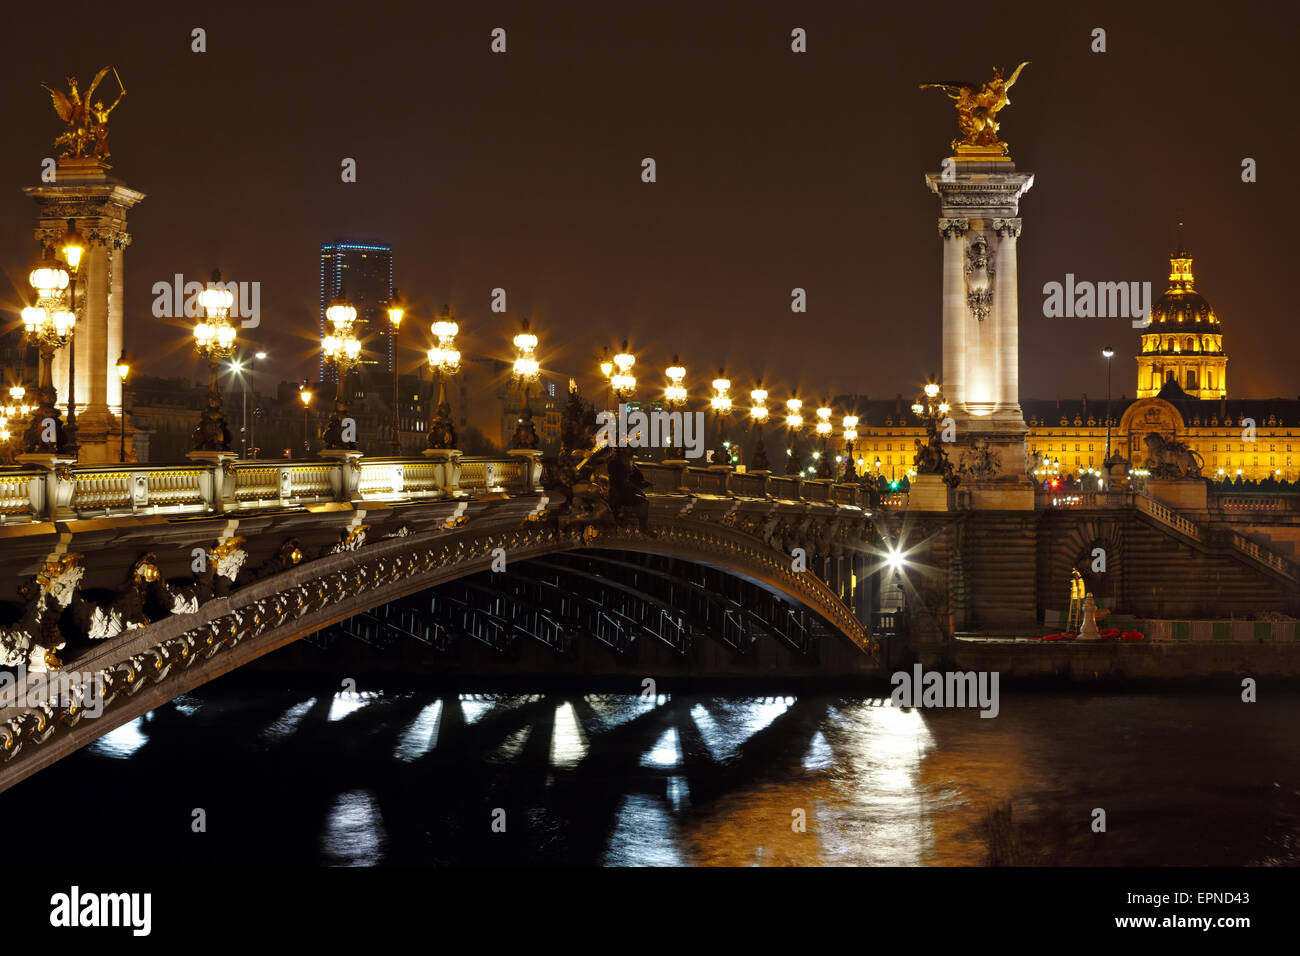 The Alexander III Bridge at night in Paris, France Stock Photo